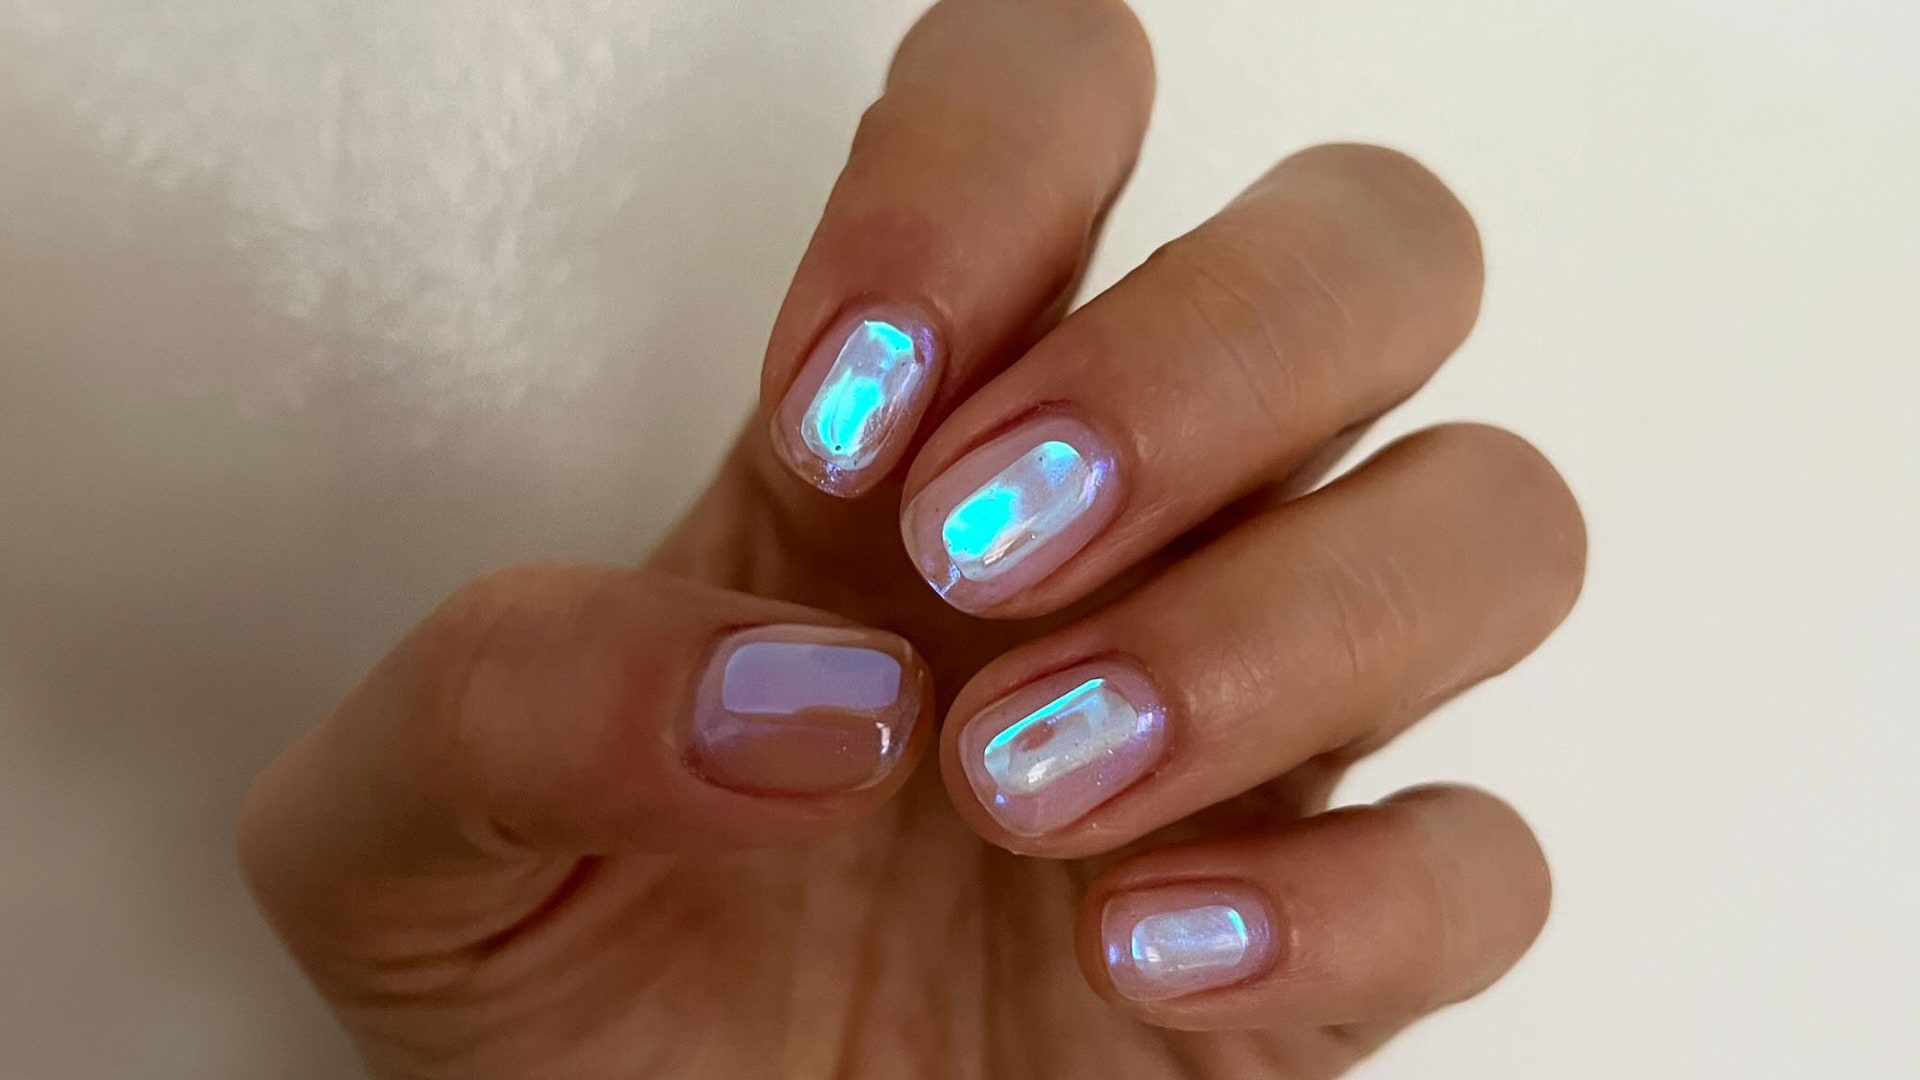 Aurora nails are the new glazed donut